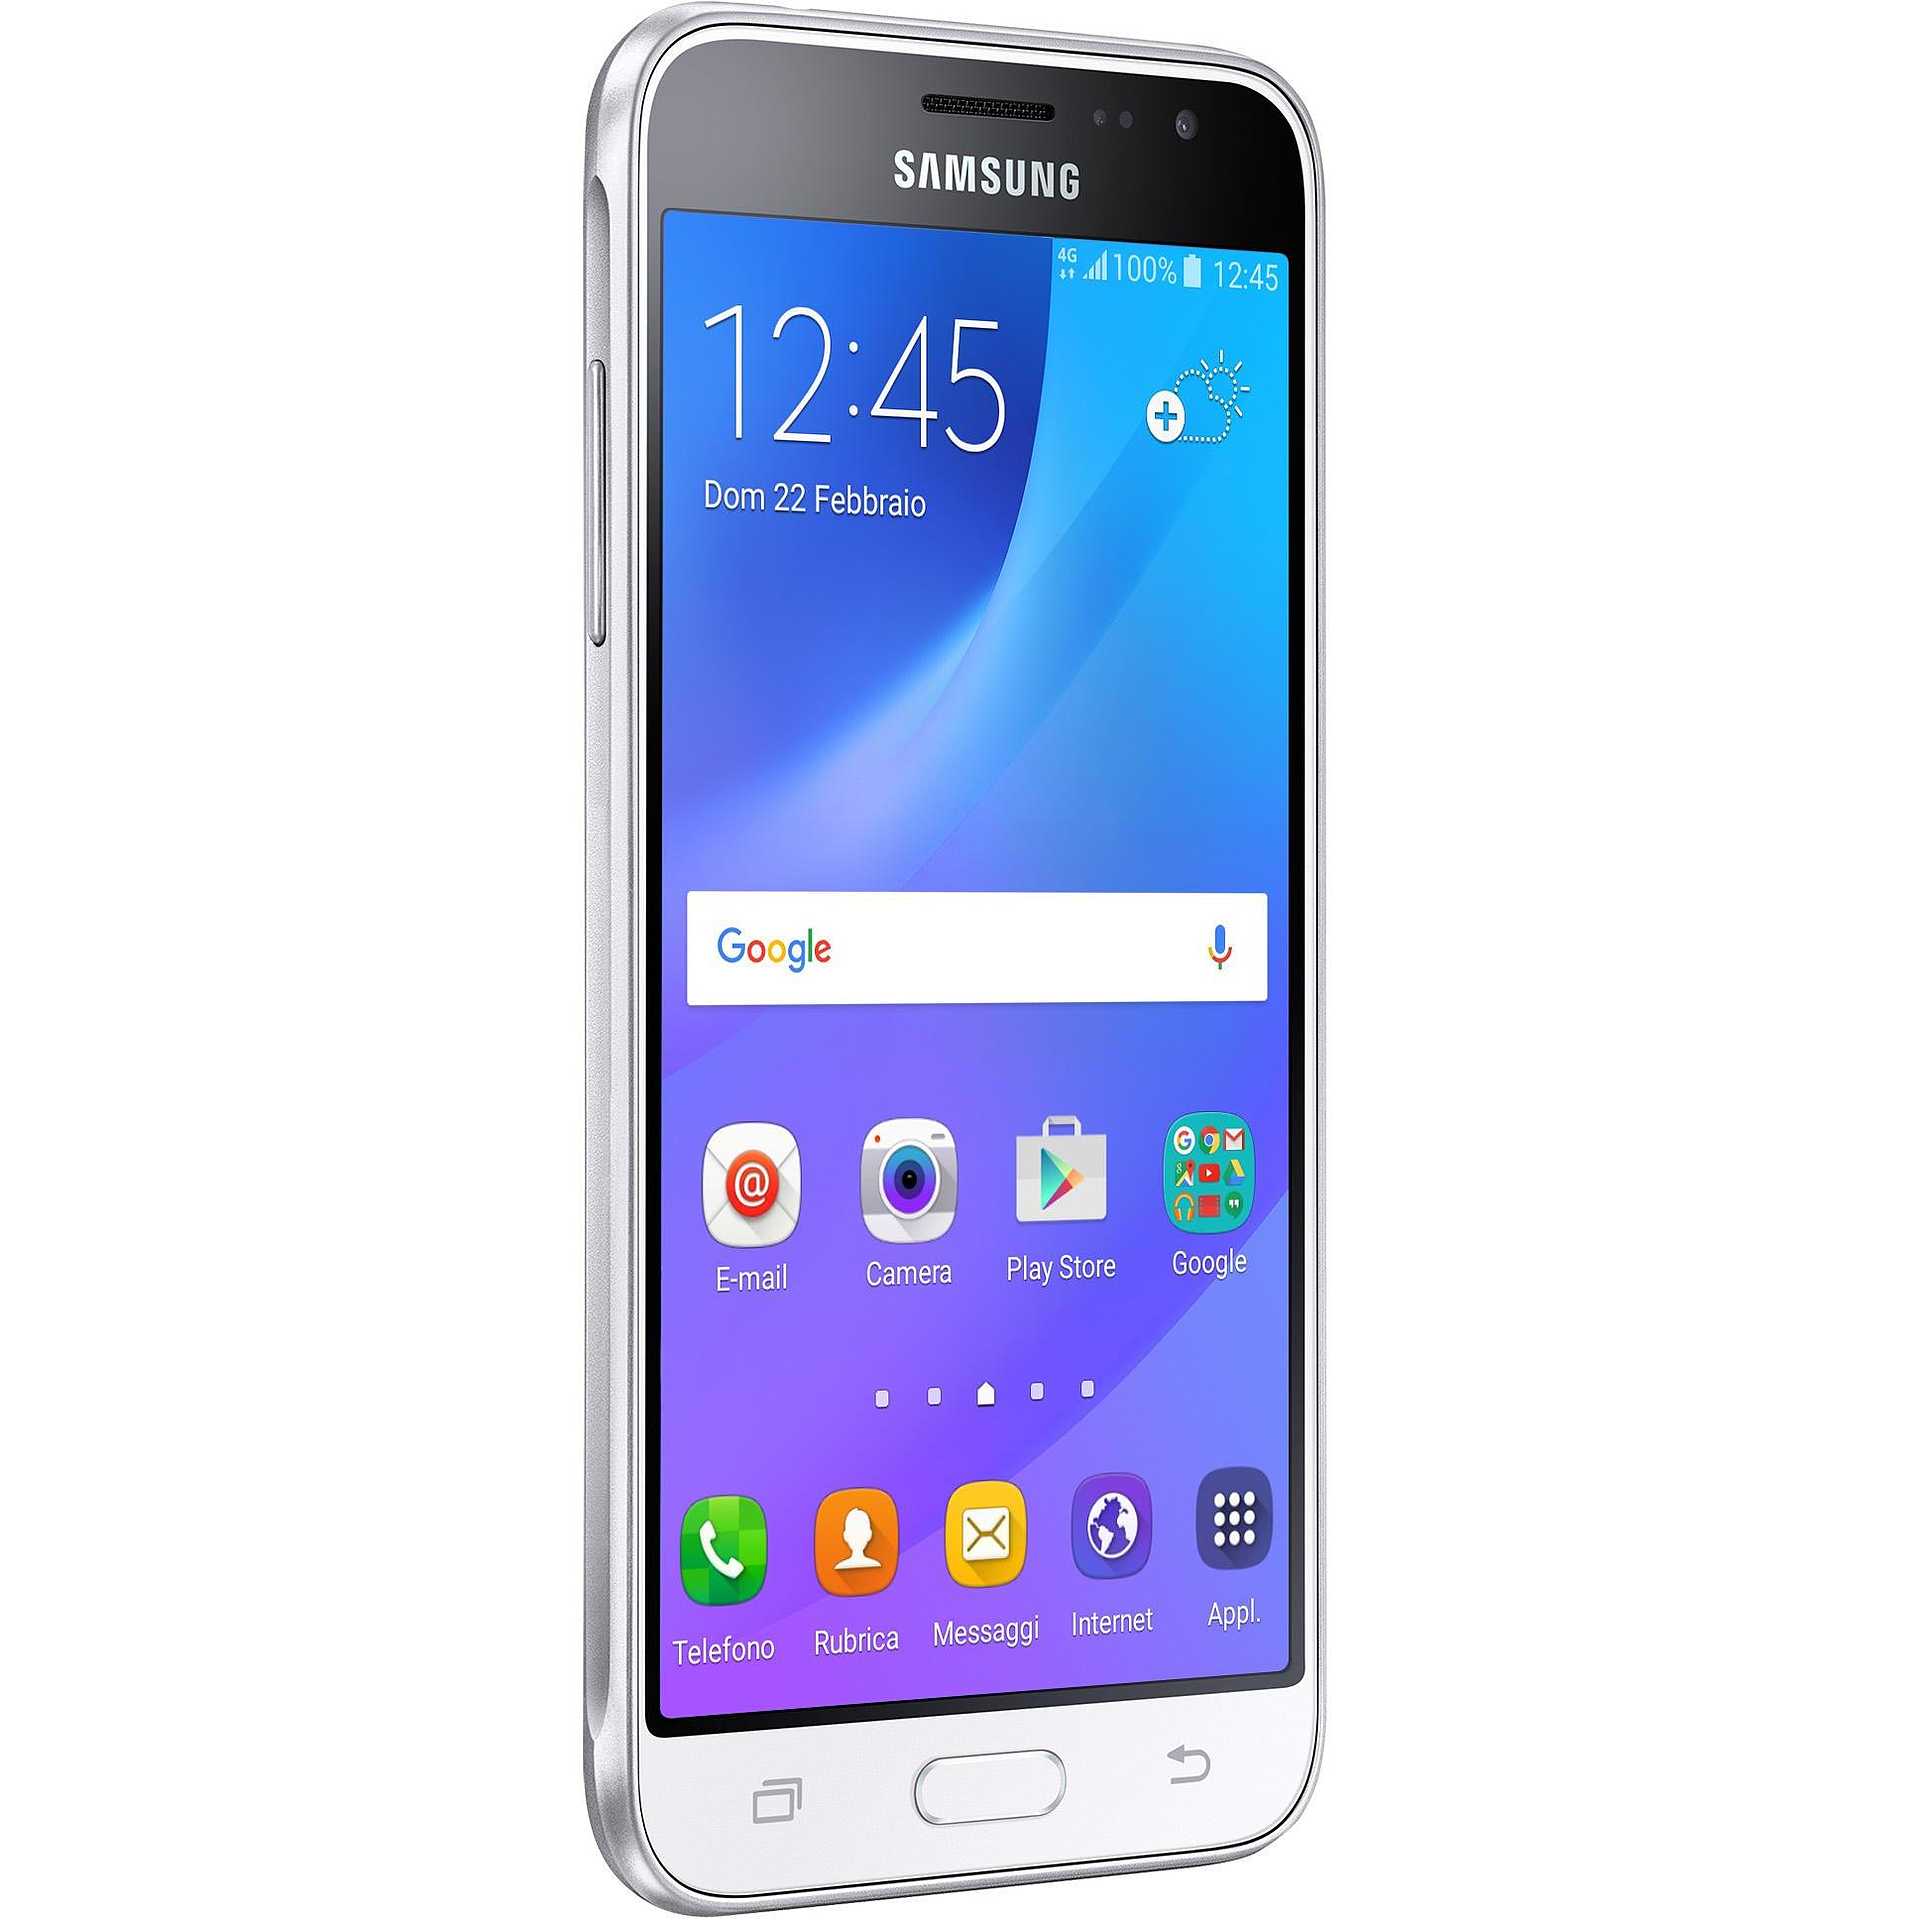 Телефоны самсунг цены спб. Samsung Galaxy j3 2016. Самсунг Джи 3. Самсунг Джи 3 2016. Самсунг галакси j3.